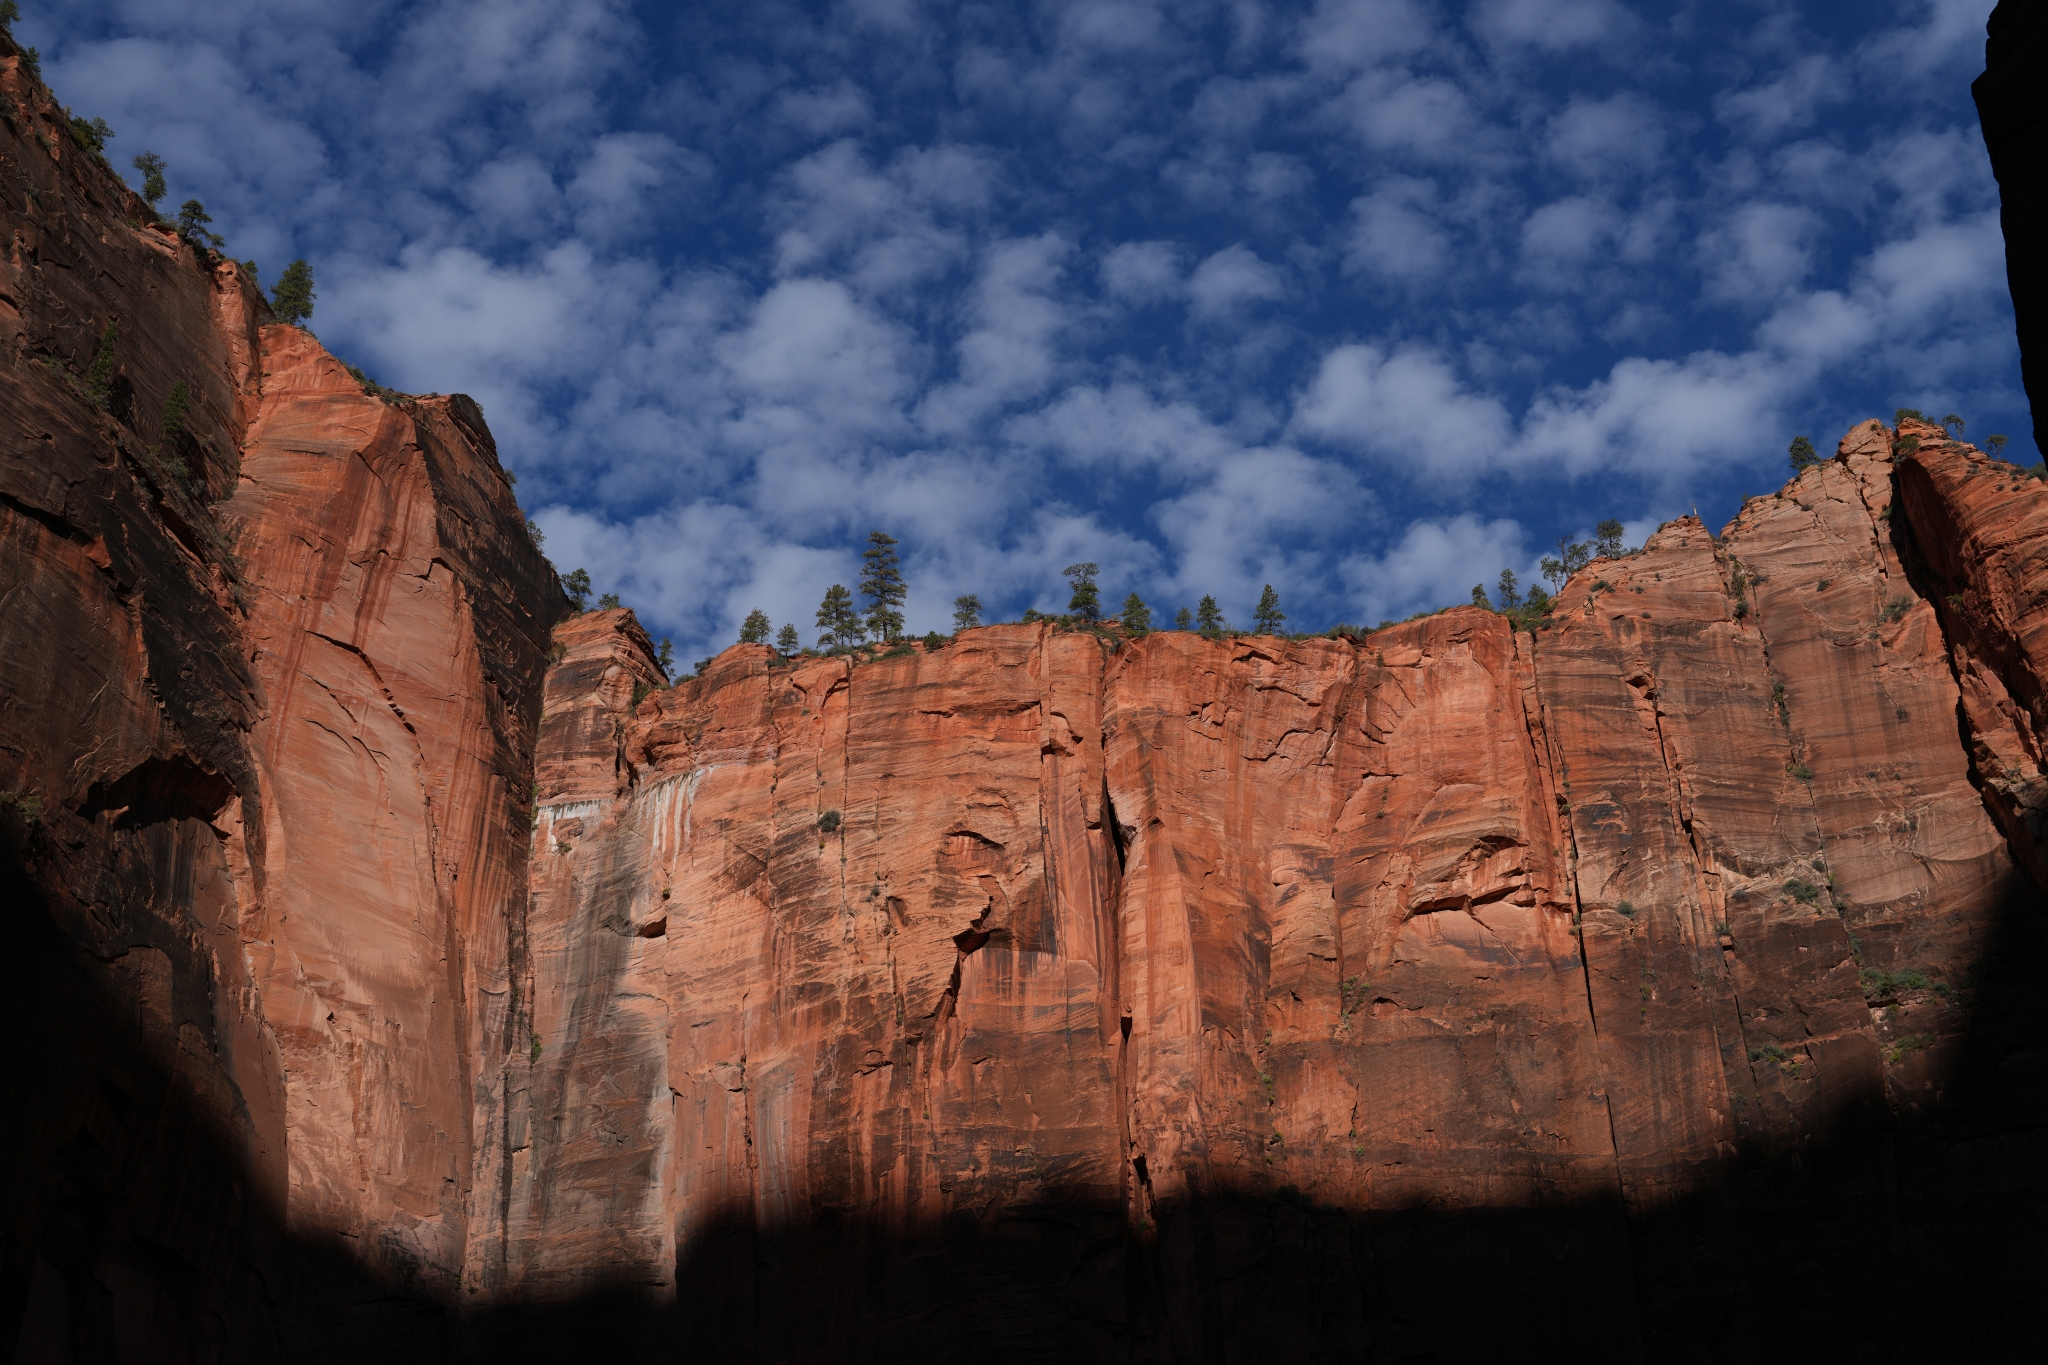 Red rocky cliffs against a deep blue sky